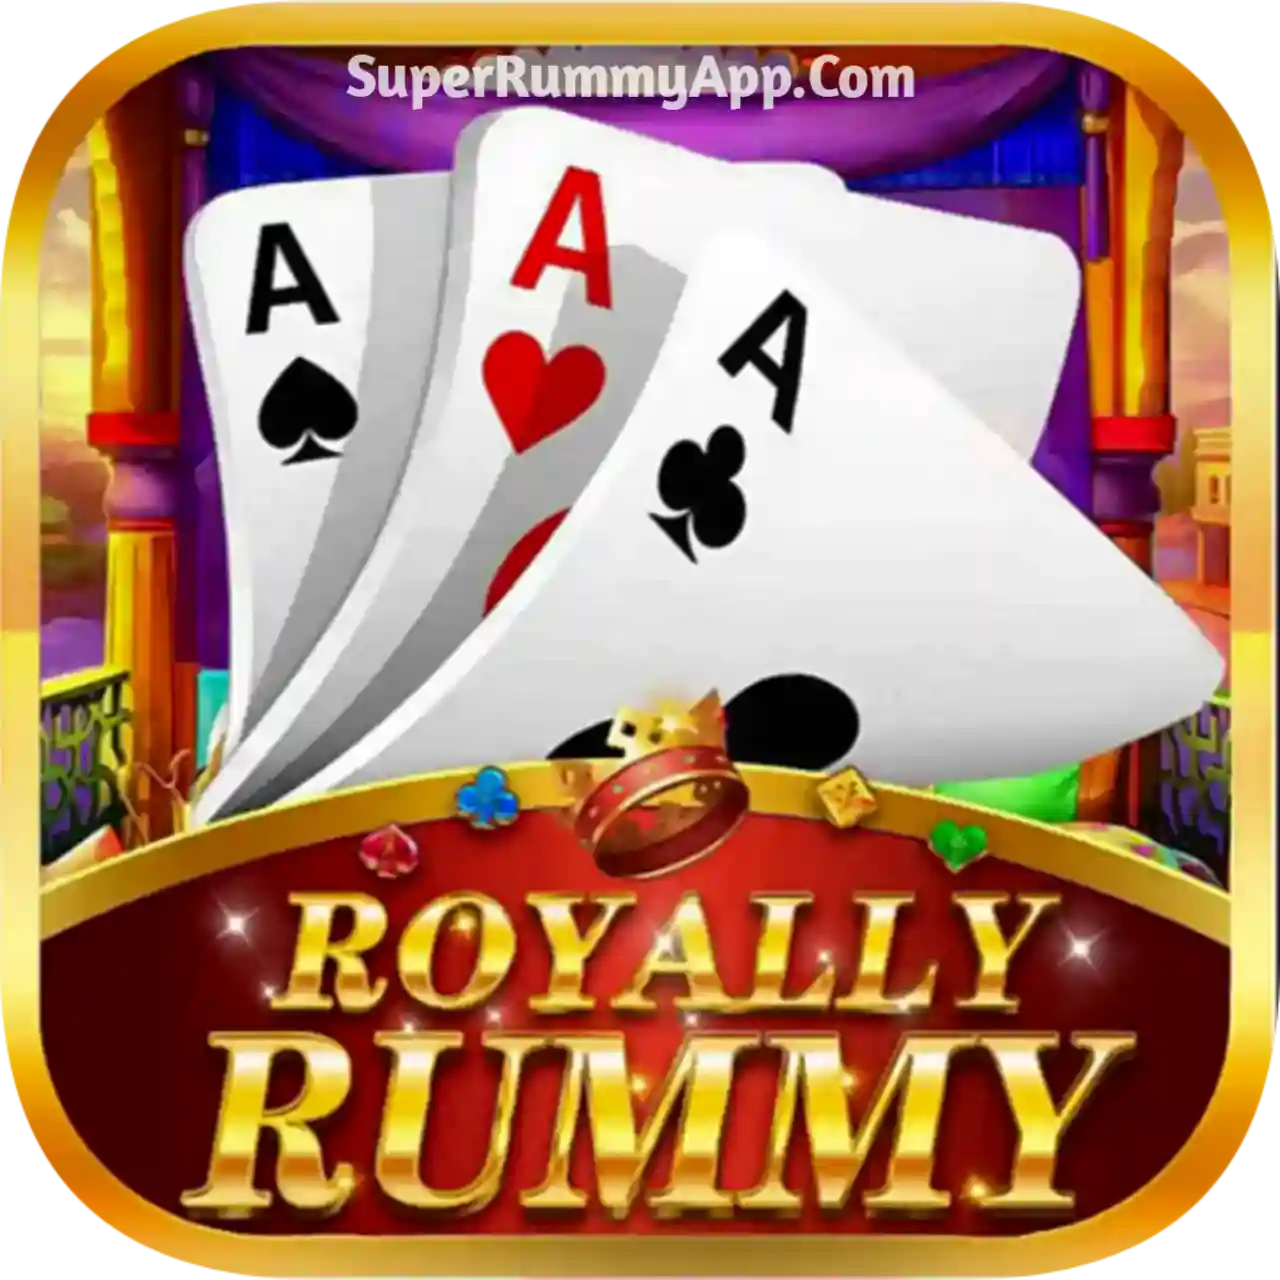 Royally Rummy App Download All Rummy Apps List - Super Rummy App